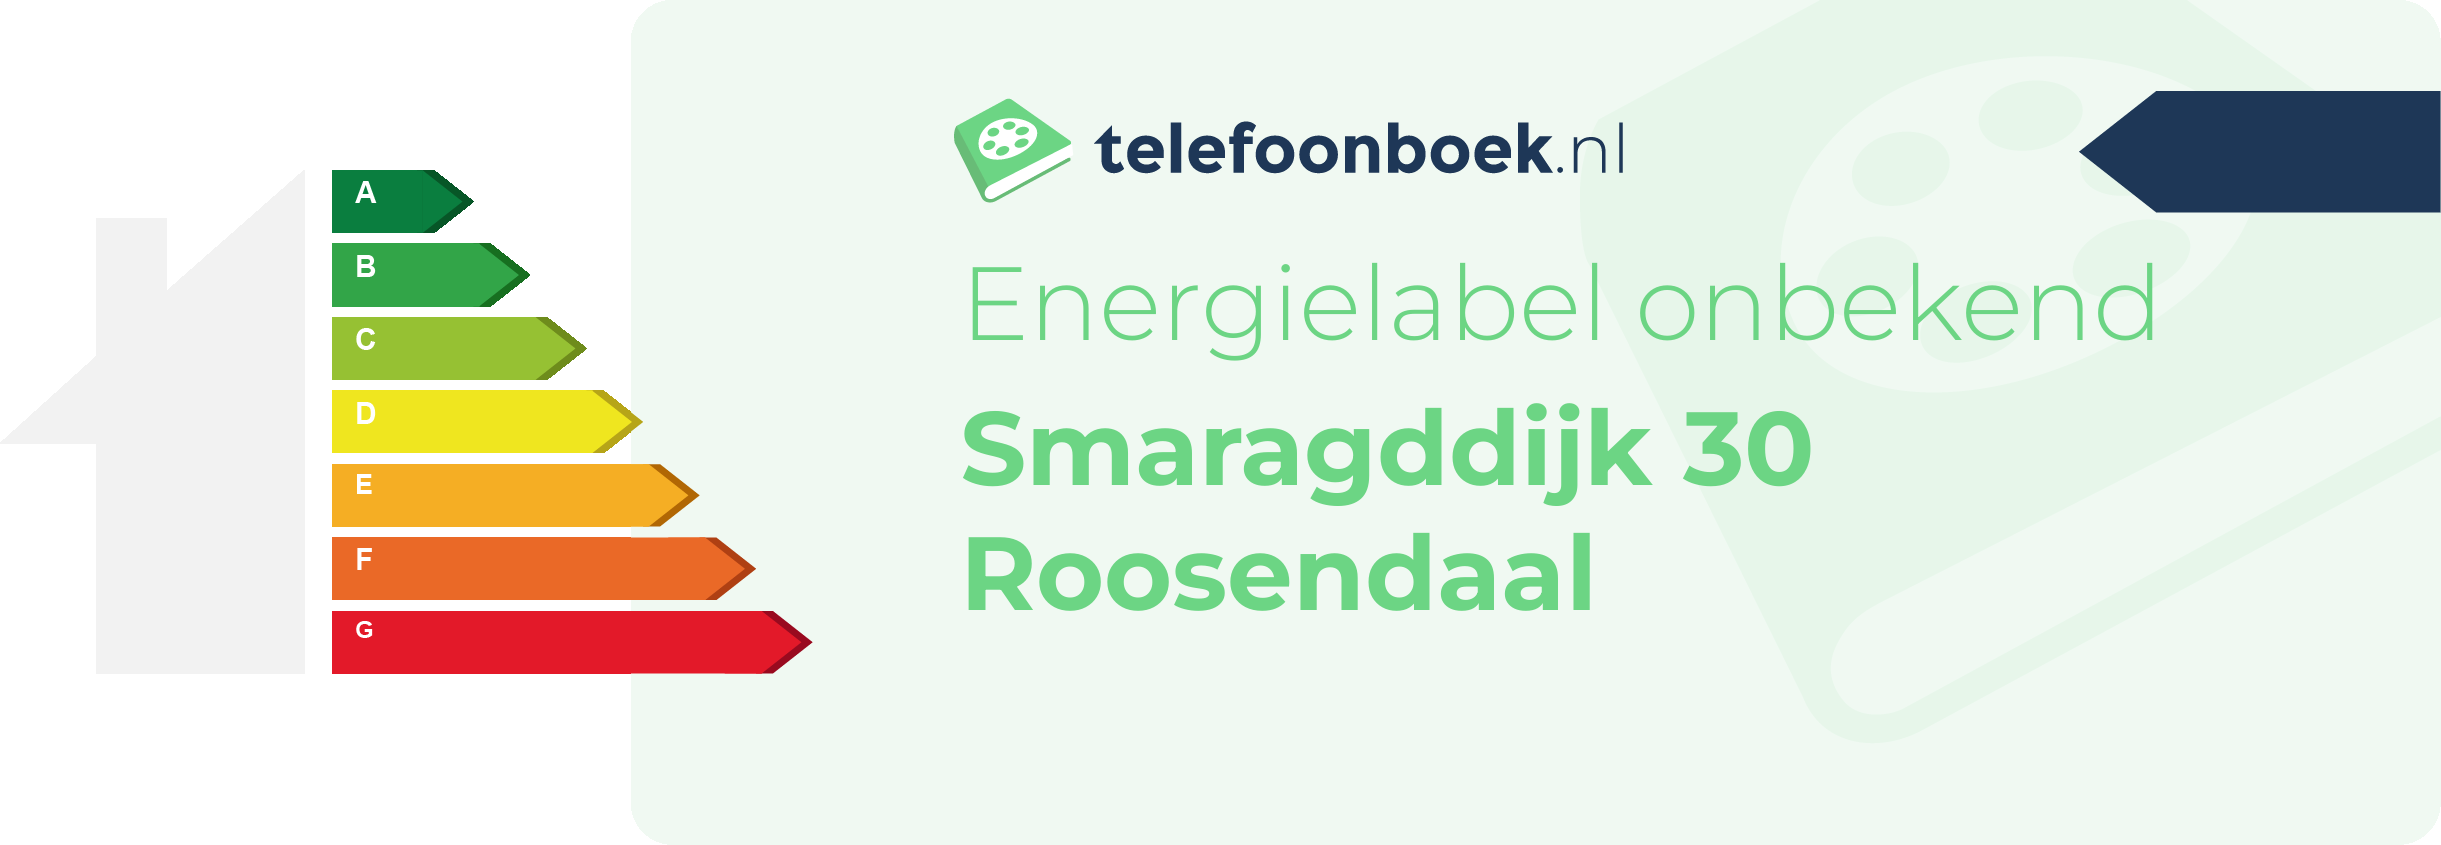 Energielabel Smaragddijk 30 Roosendaal